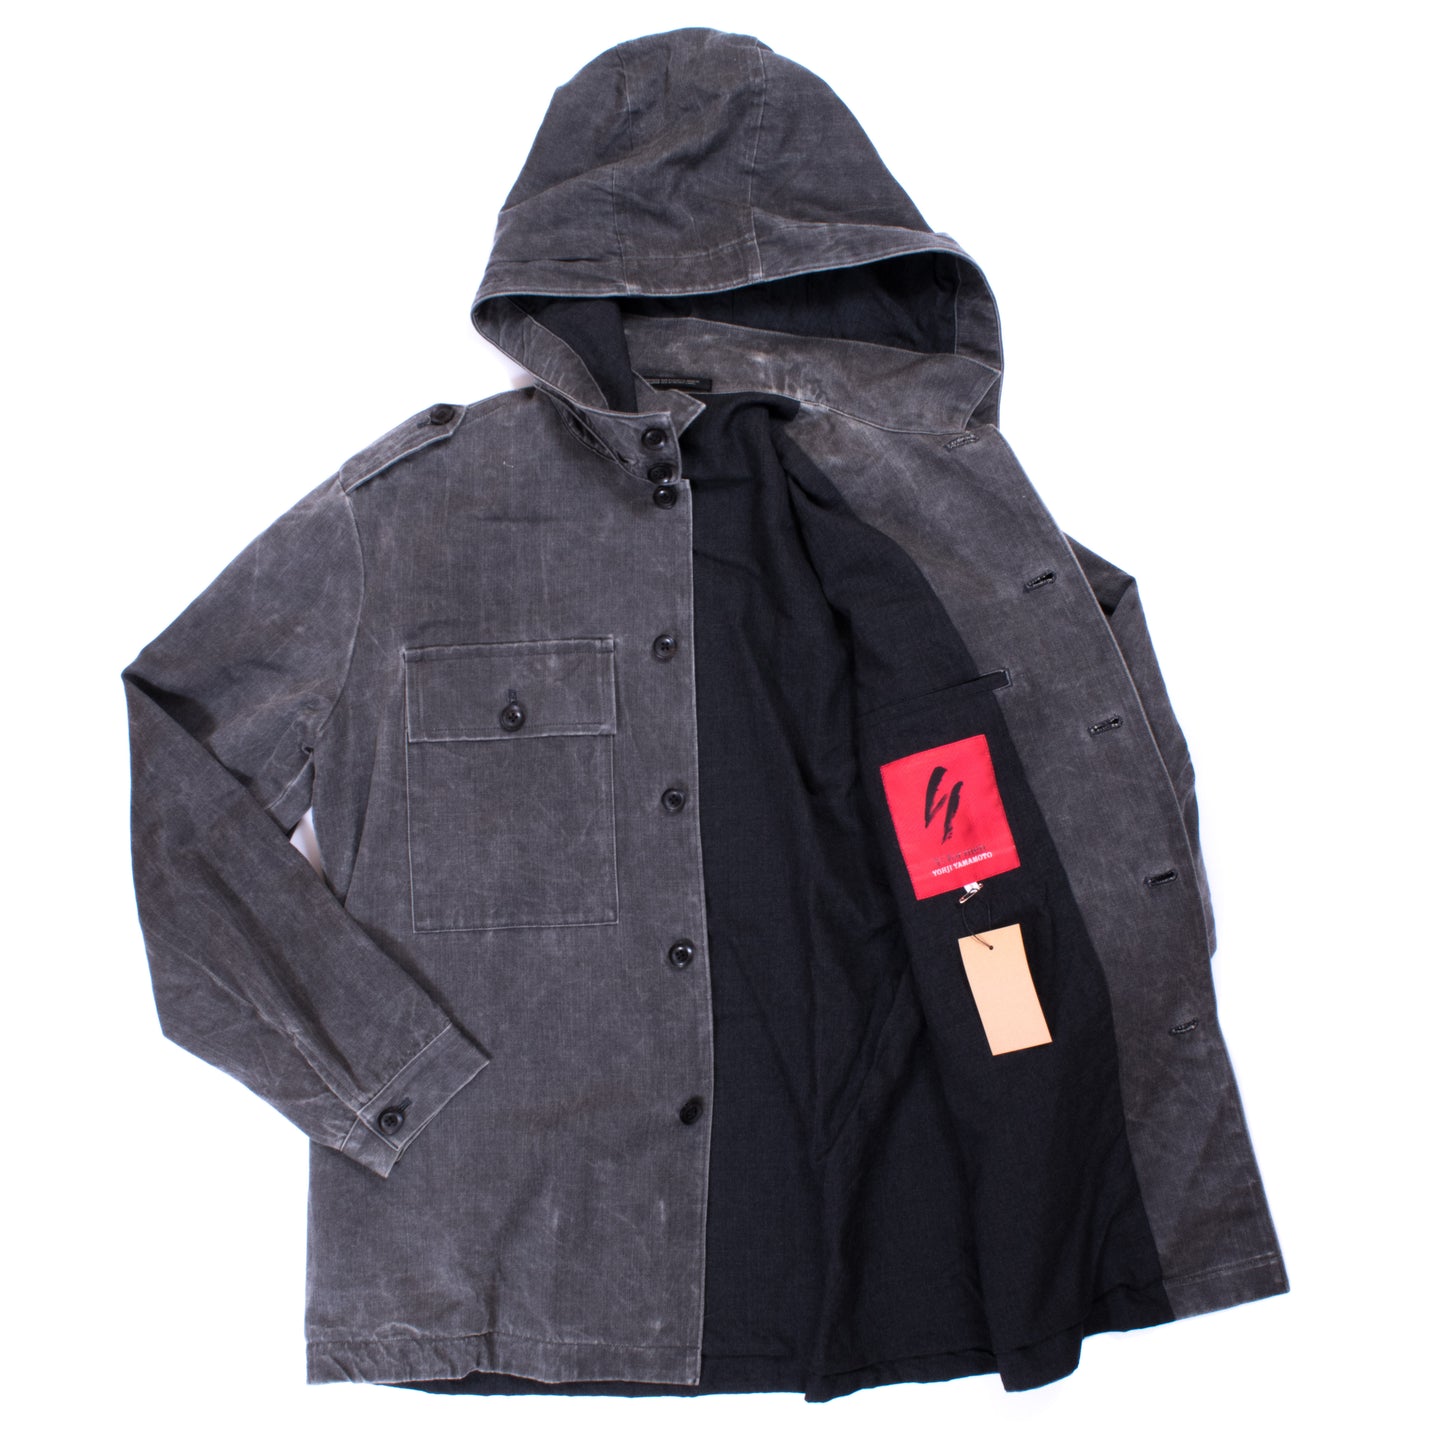 Yohji Yamamoto Y's For Men Red Label Stone Wash M-65 Jacket